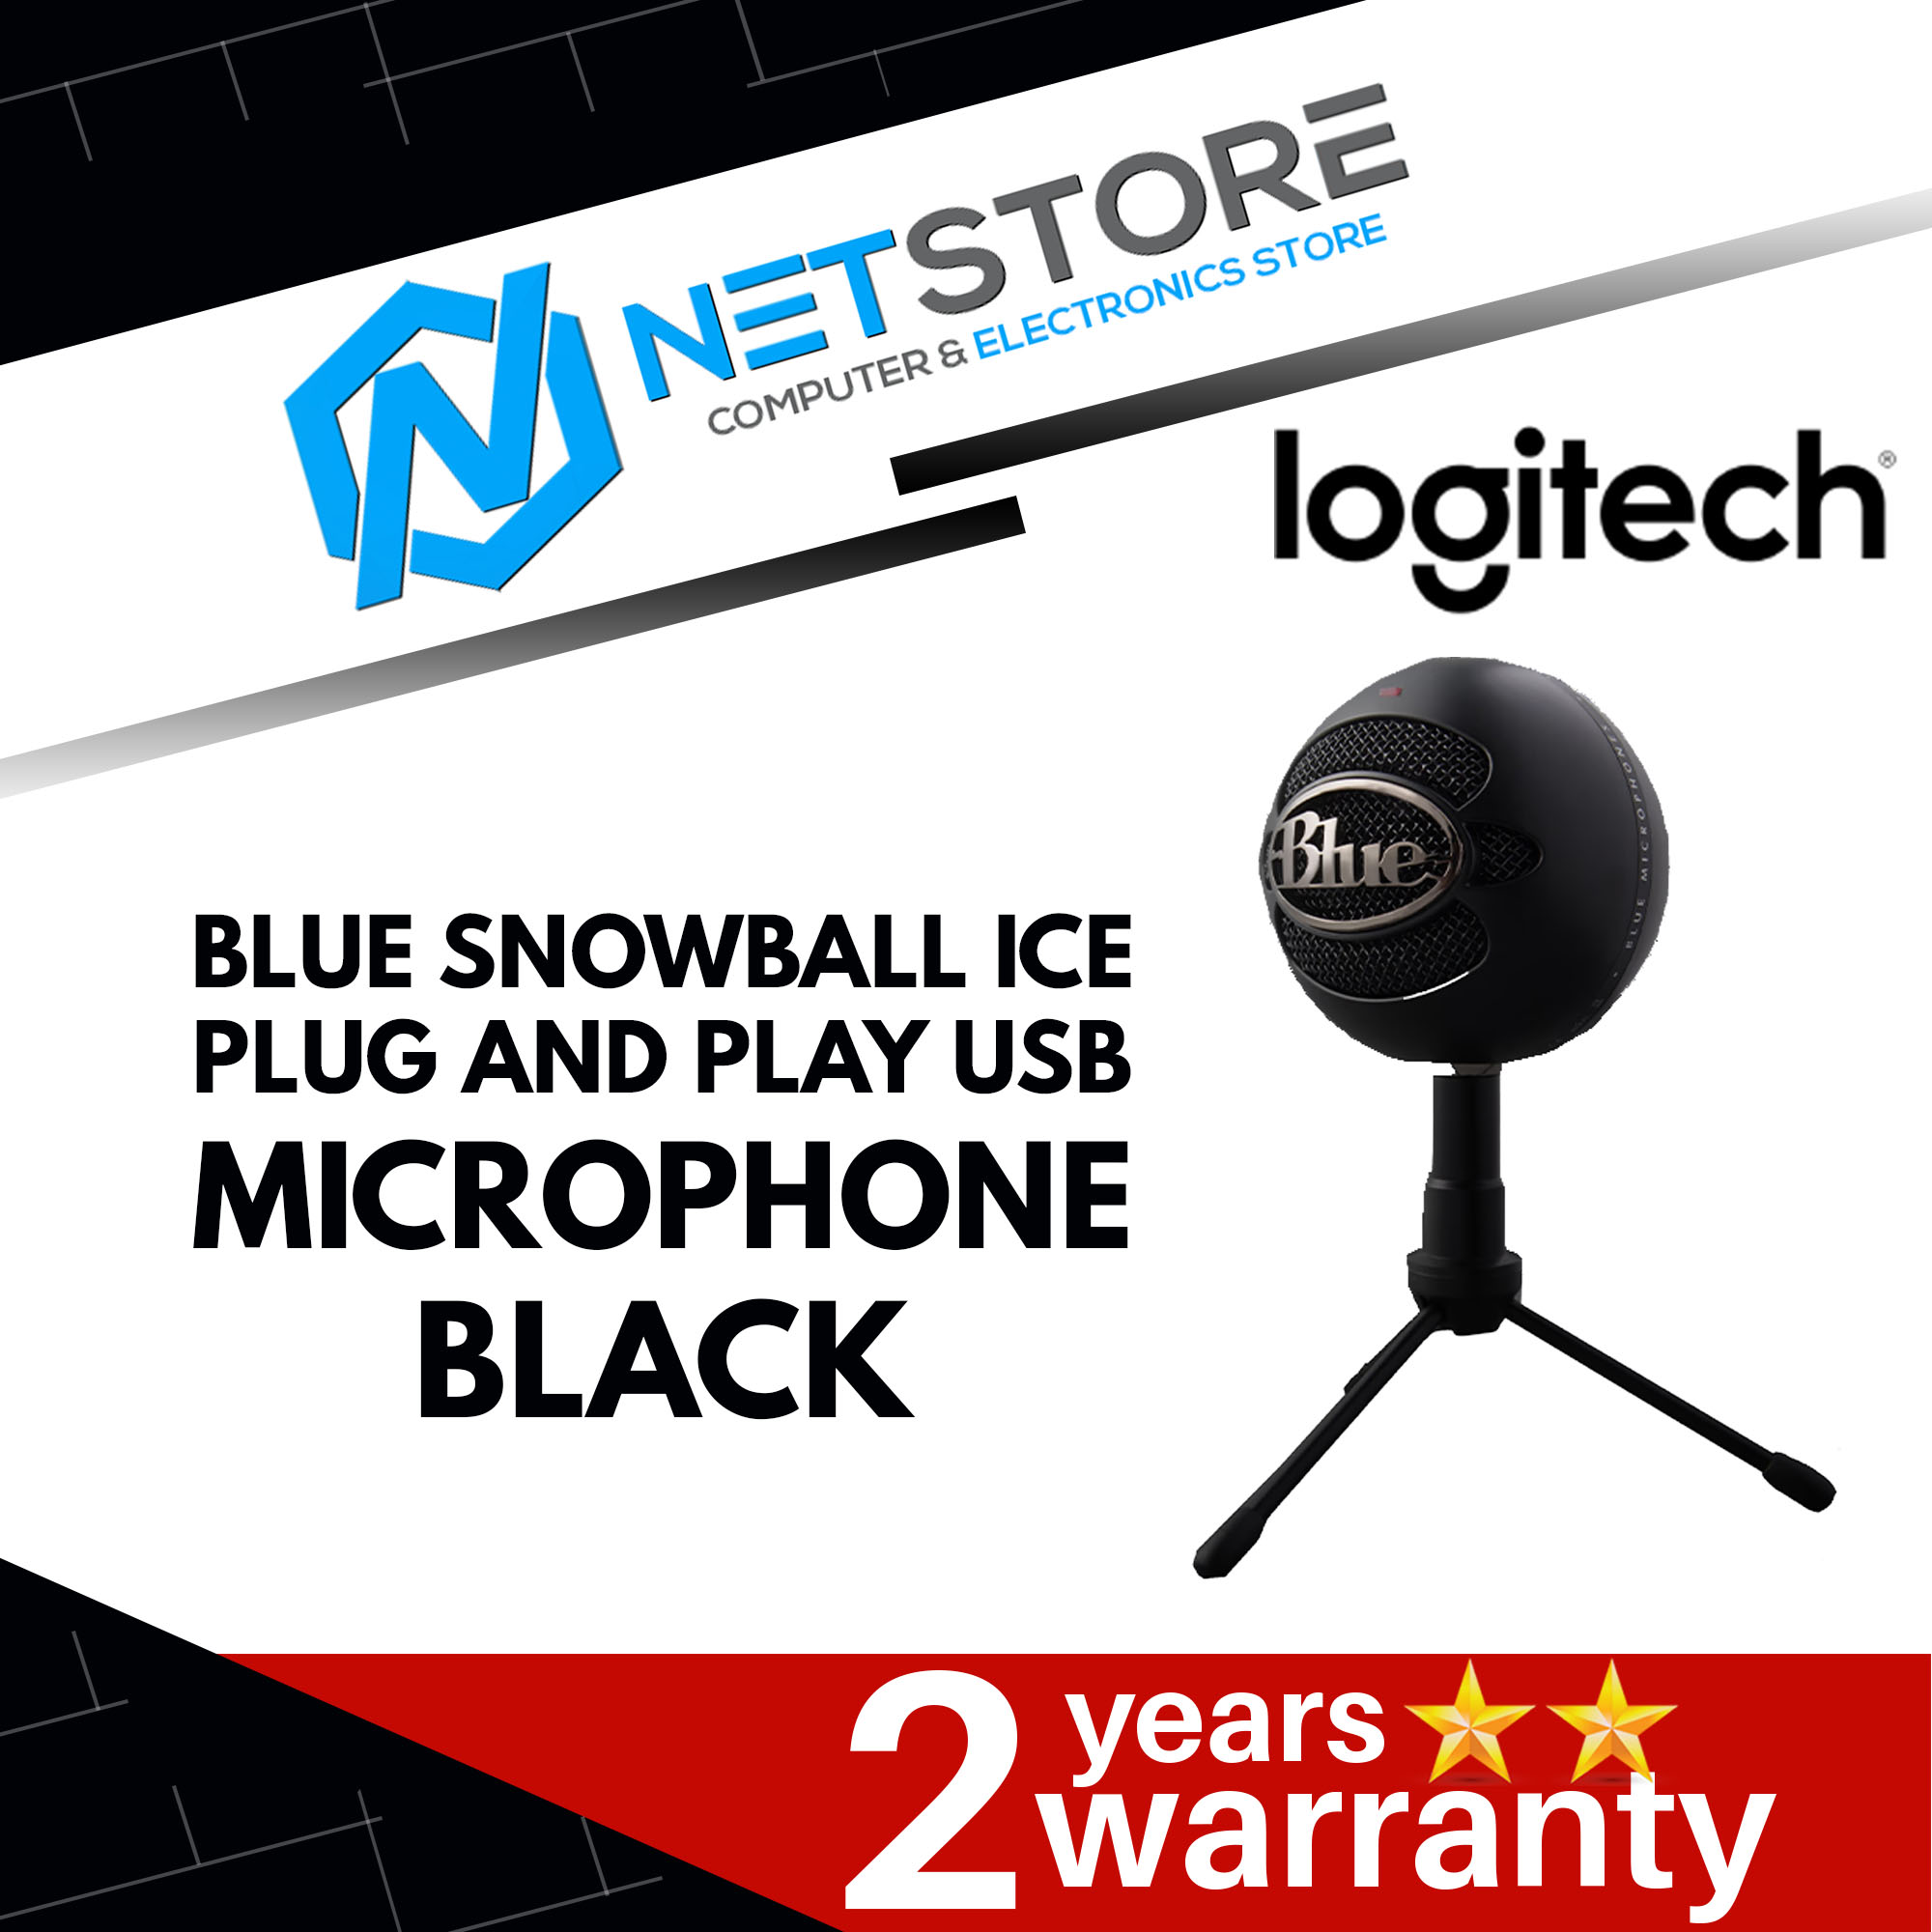 LOGITECH BLUE SNOWBALL ICE PLUG AND PLAY USB MICROPHONE - BLACK